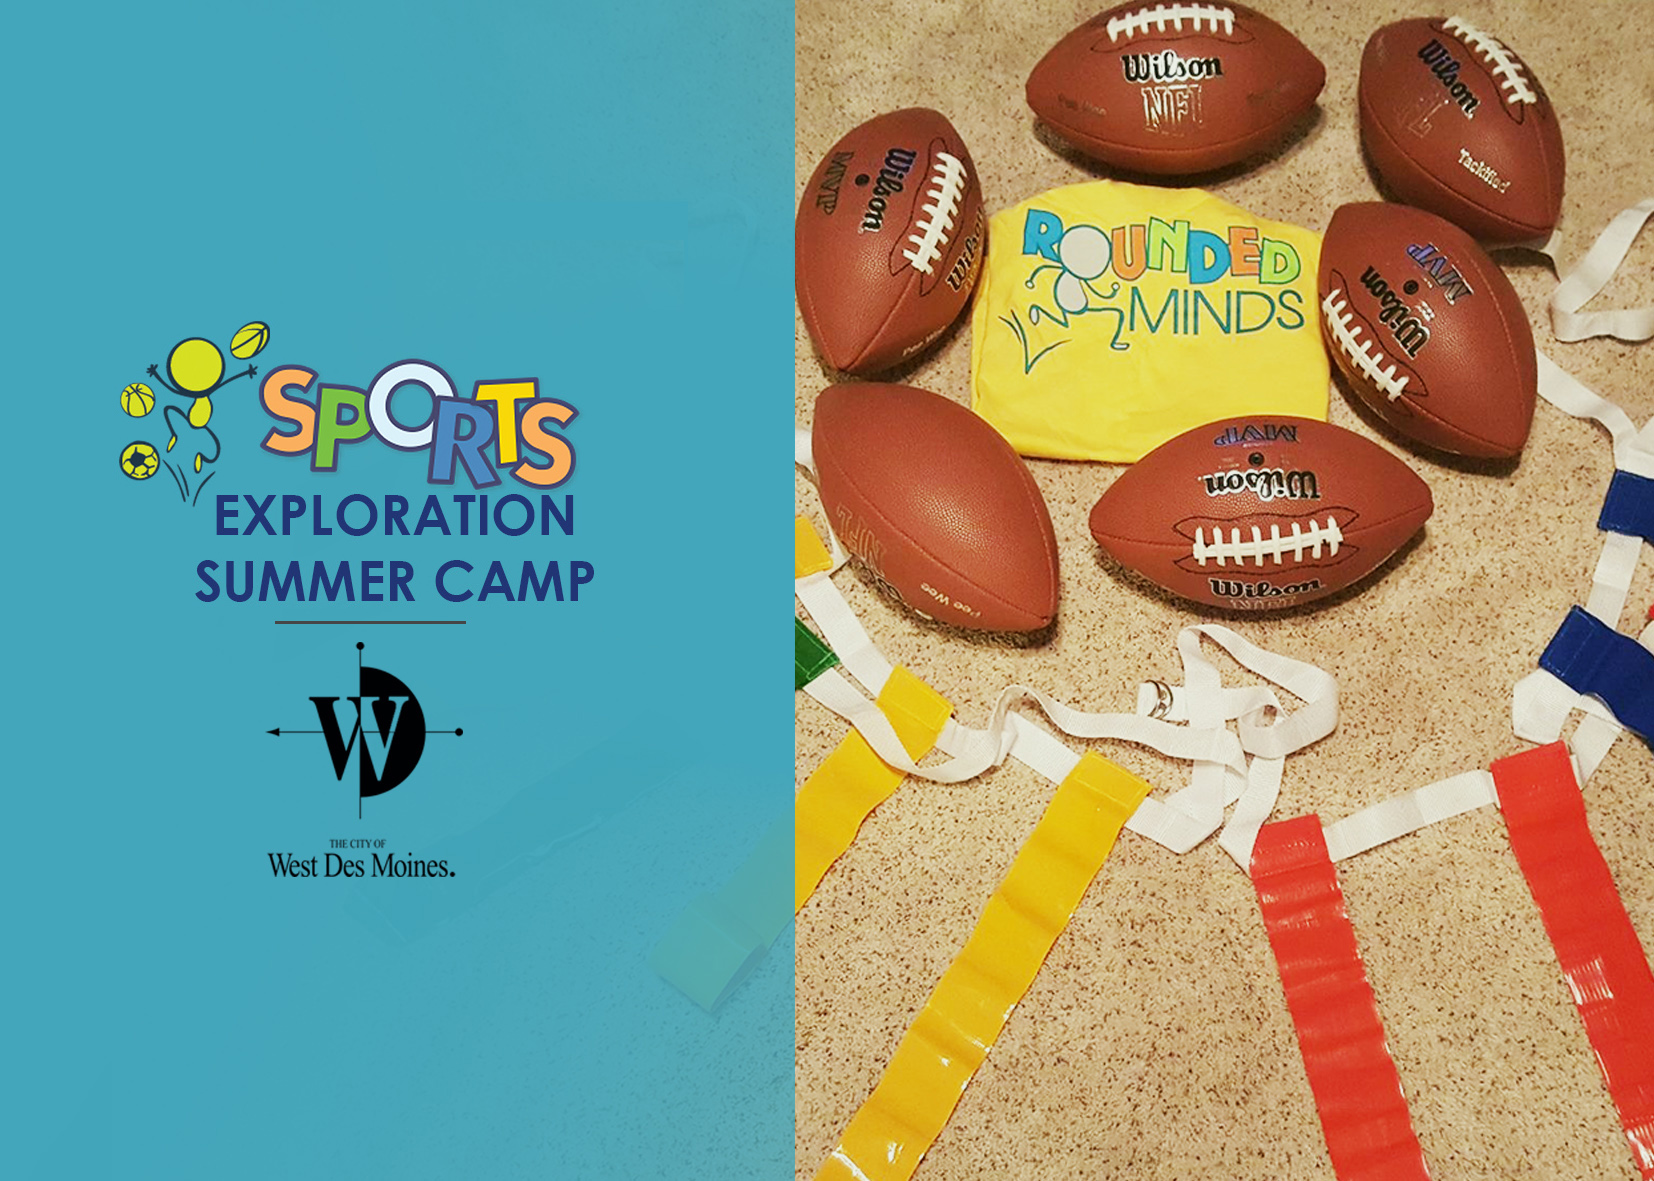 Sports Exploration West Des Moines 36 yo Summer Camp Rounded Minds